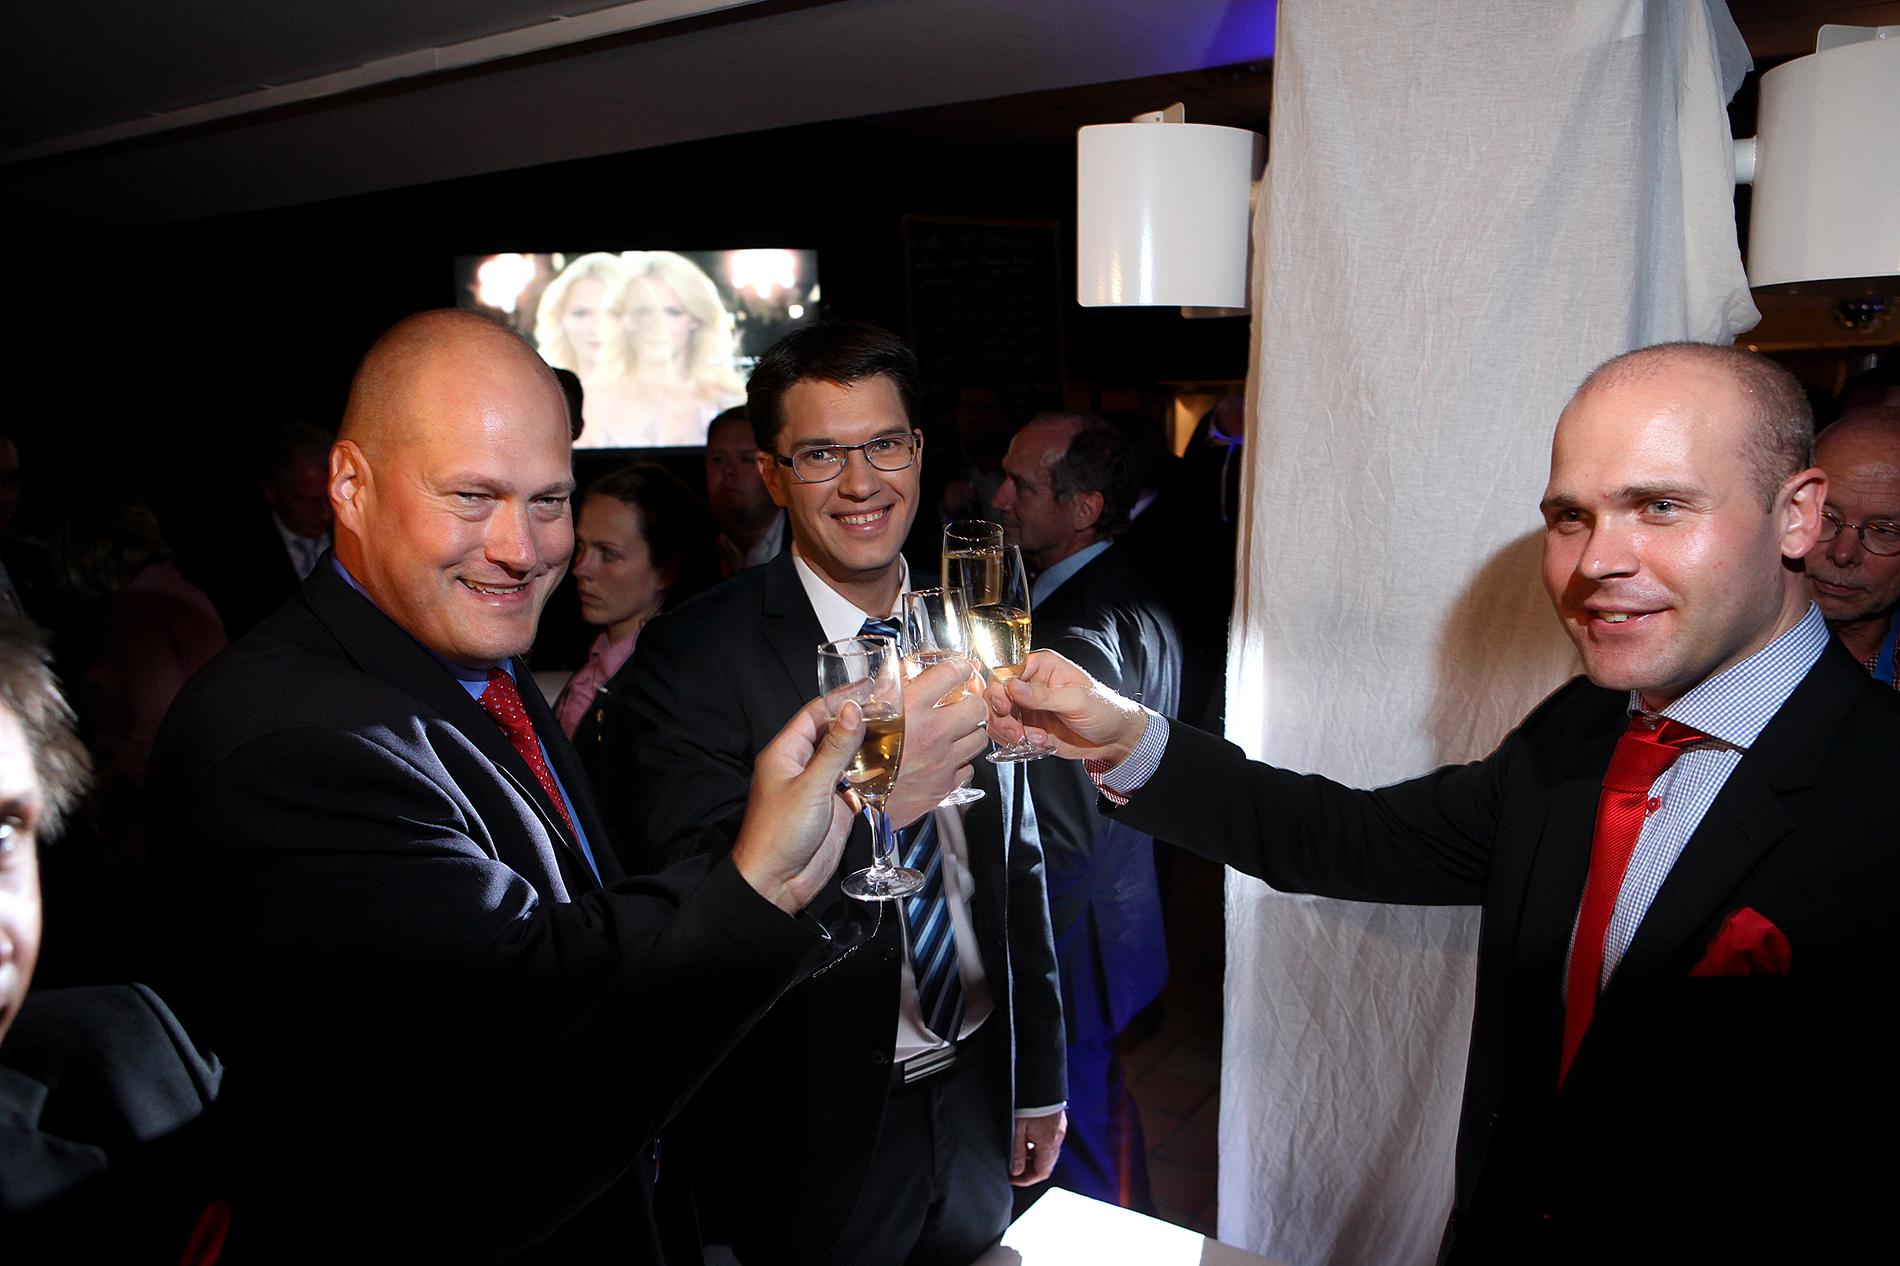 Sverigedemokraternas valvaka 2010. Sven-Olof Sällström, Jimmie Åkesson och Erik Almqvist, pressekreterare, dricker champagne. 